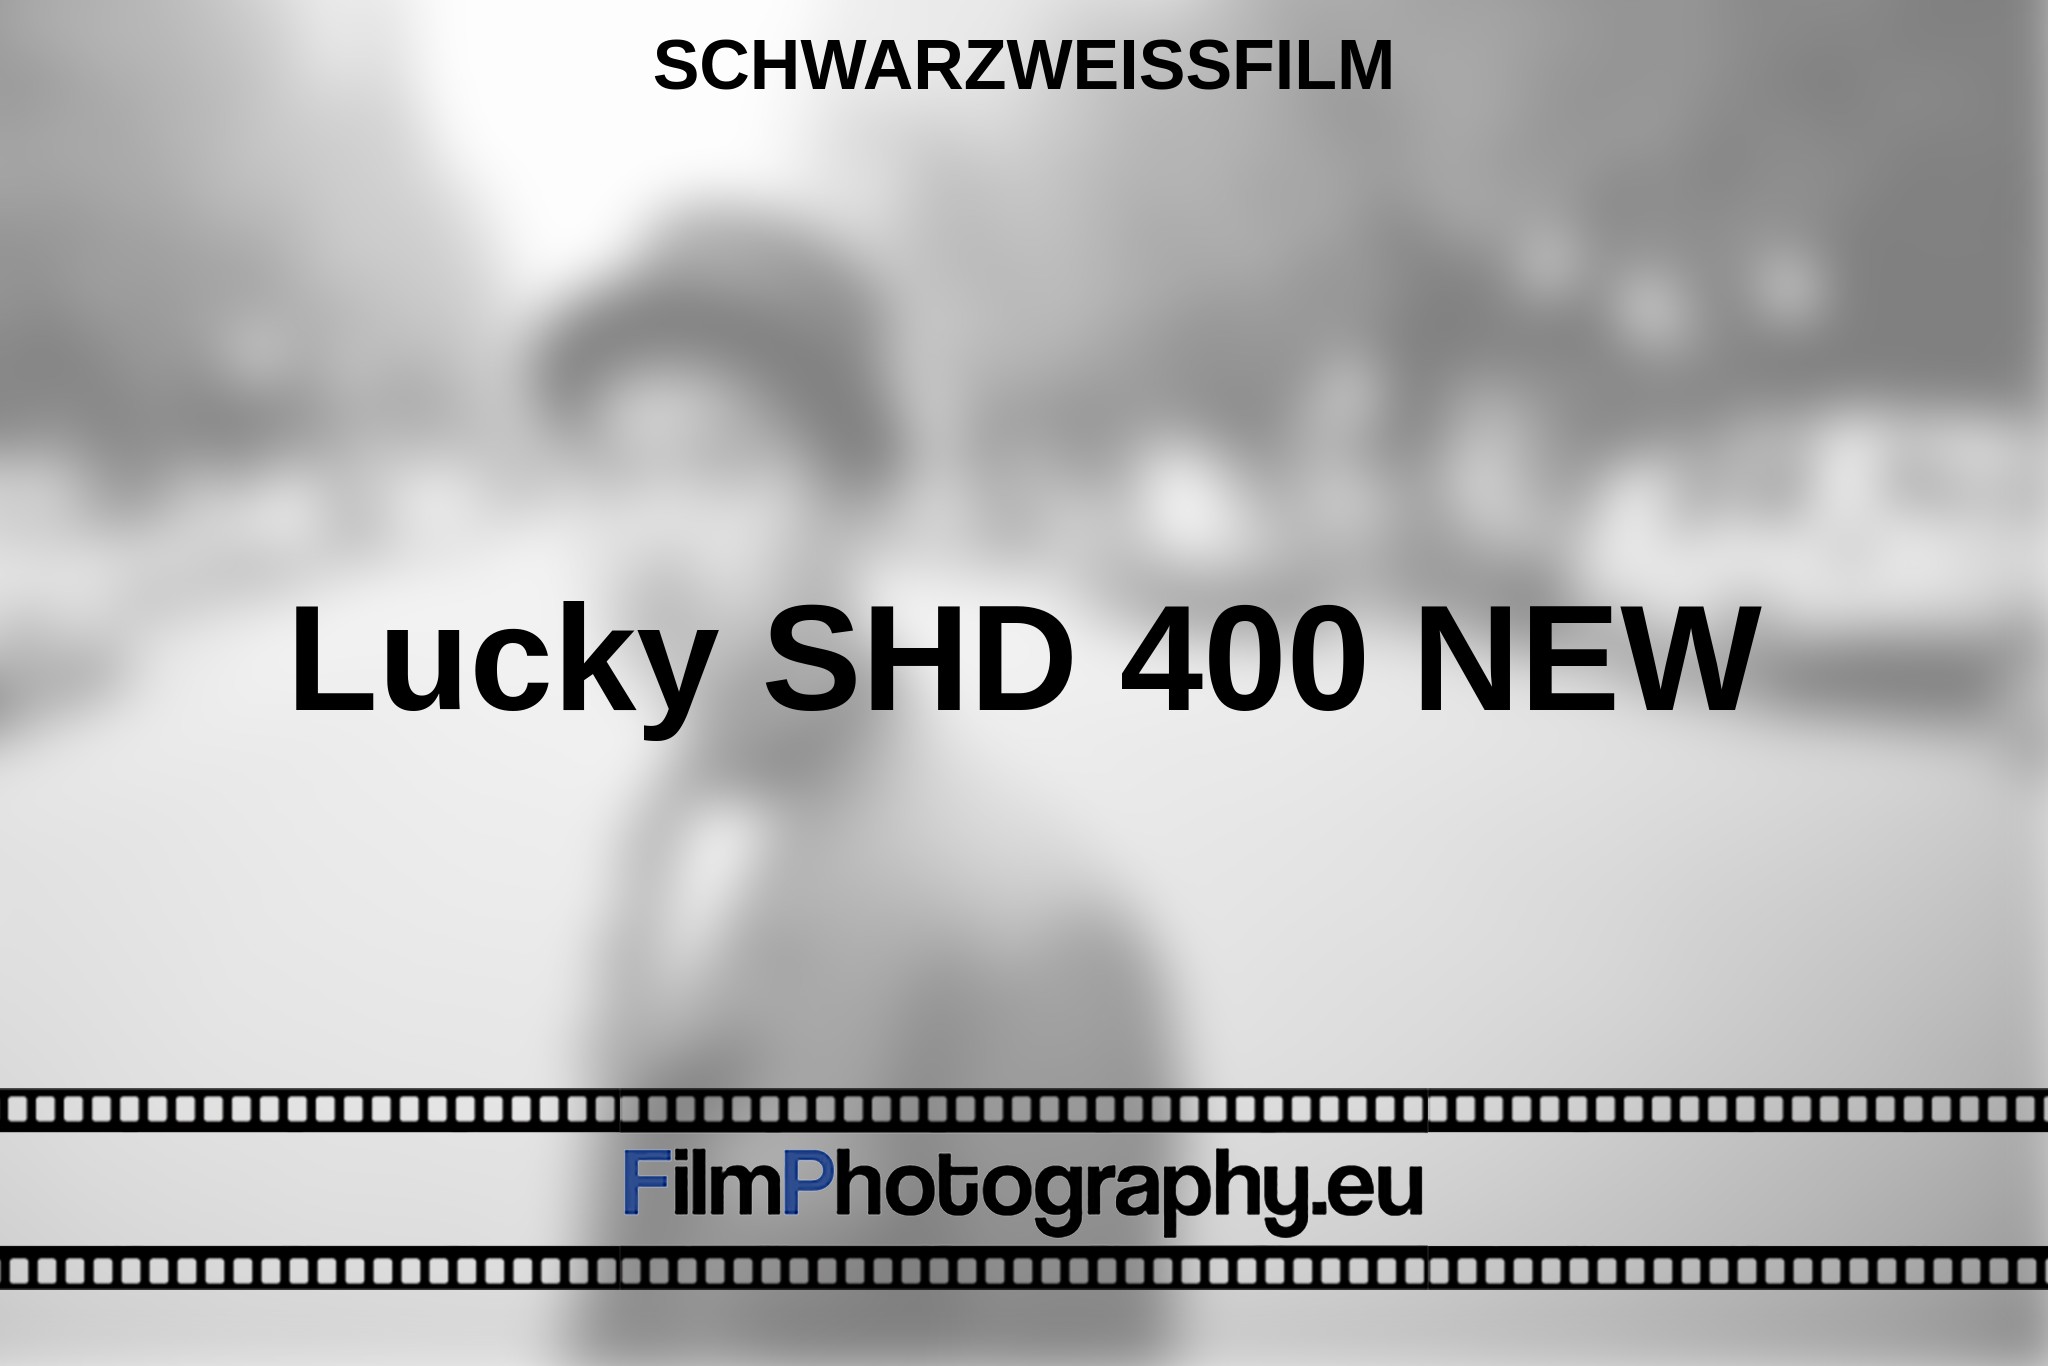 lucky-shd-400-new-schwarzweißfilm-bnv.jpg